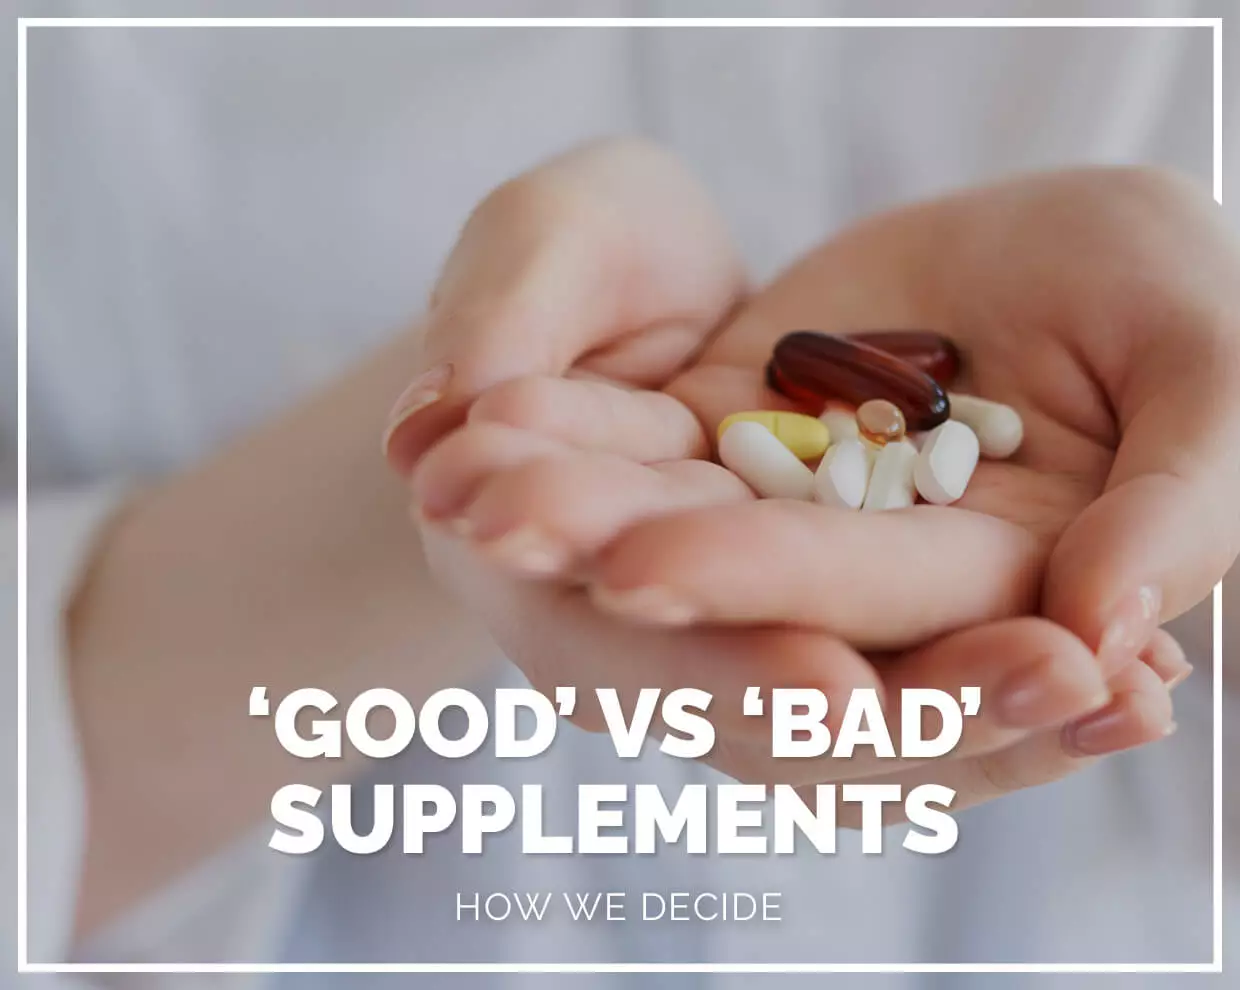 ‘Good’ vs ‘bad’ supplements - How we decide